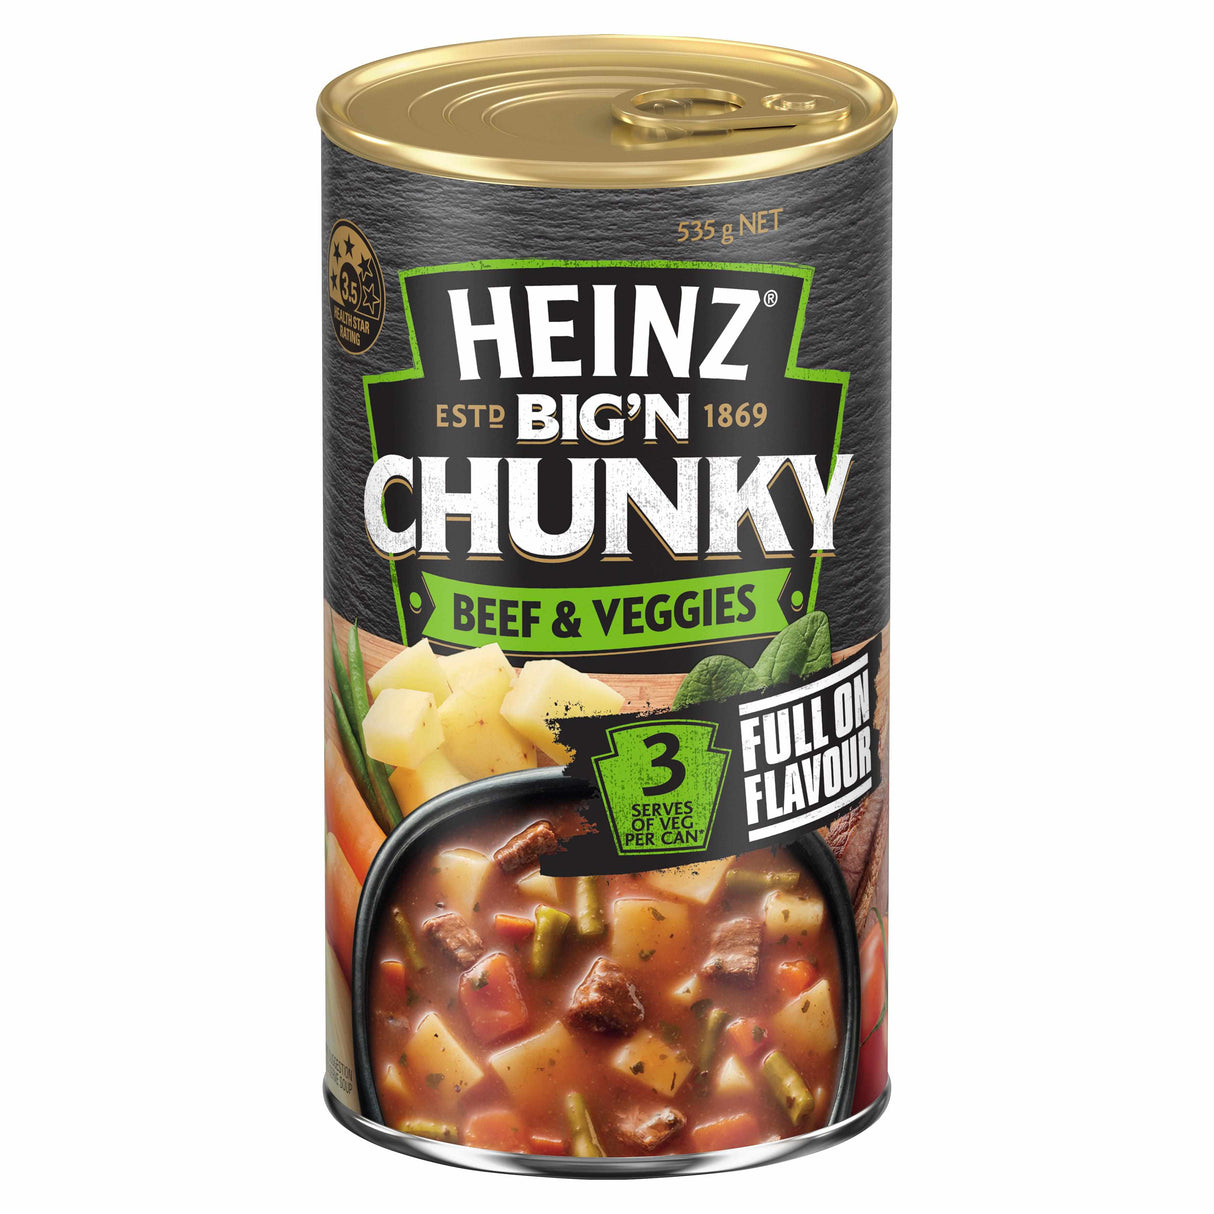 Heinz Big'N Chunky Beef & Veggies 535g